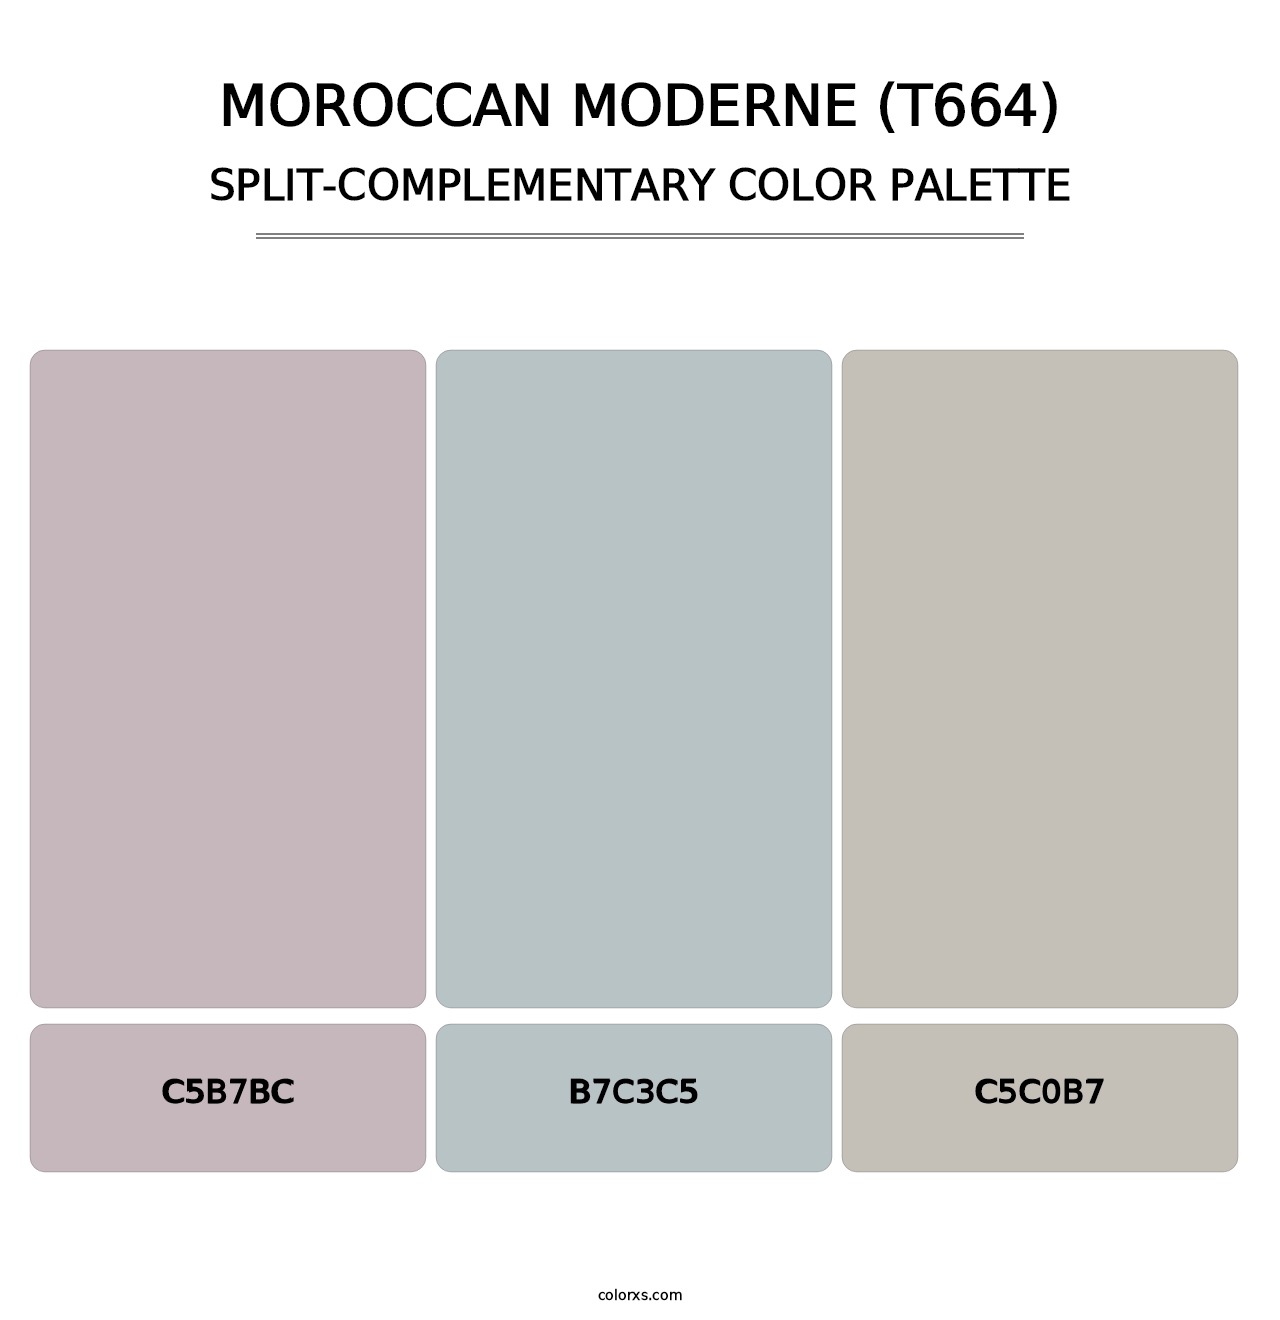 Moroccan Moderne (T664) - Split-Complementary Color Palette